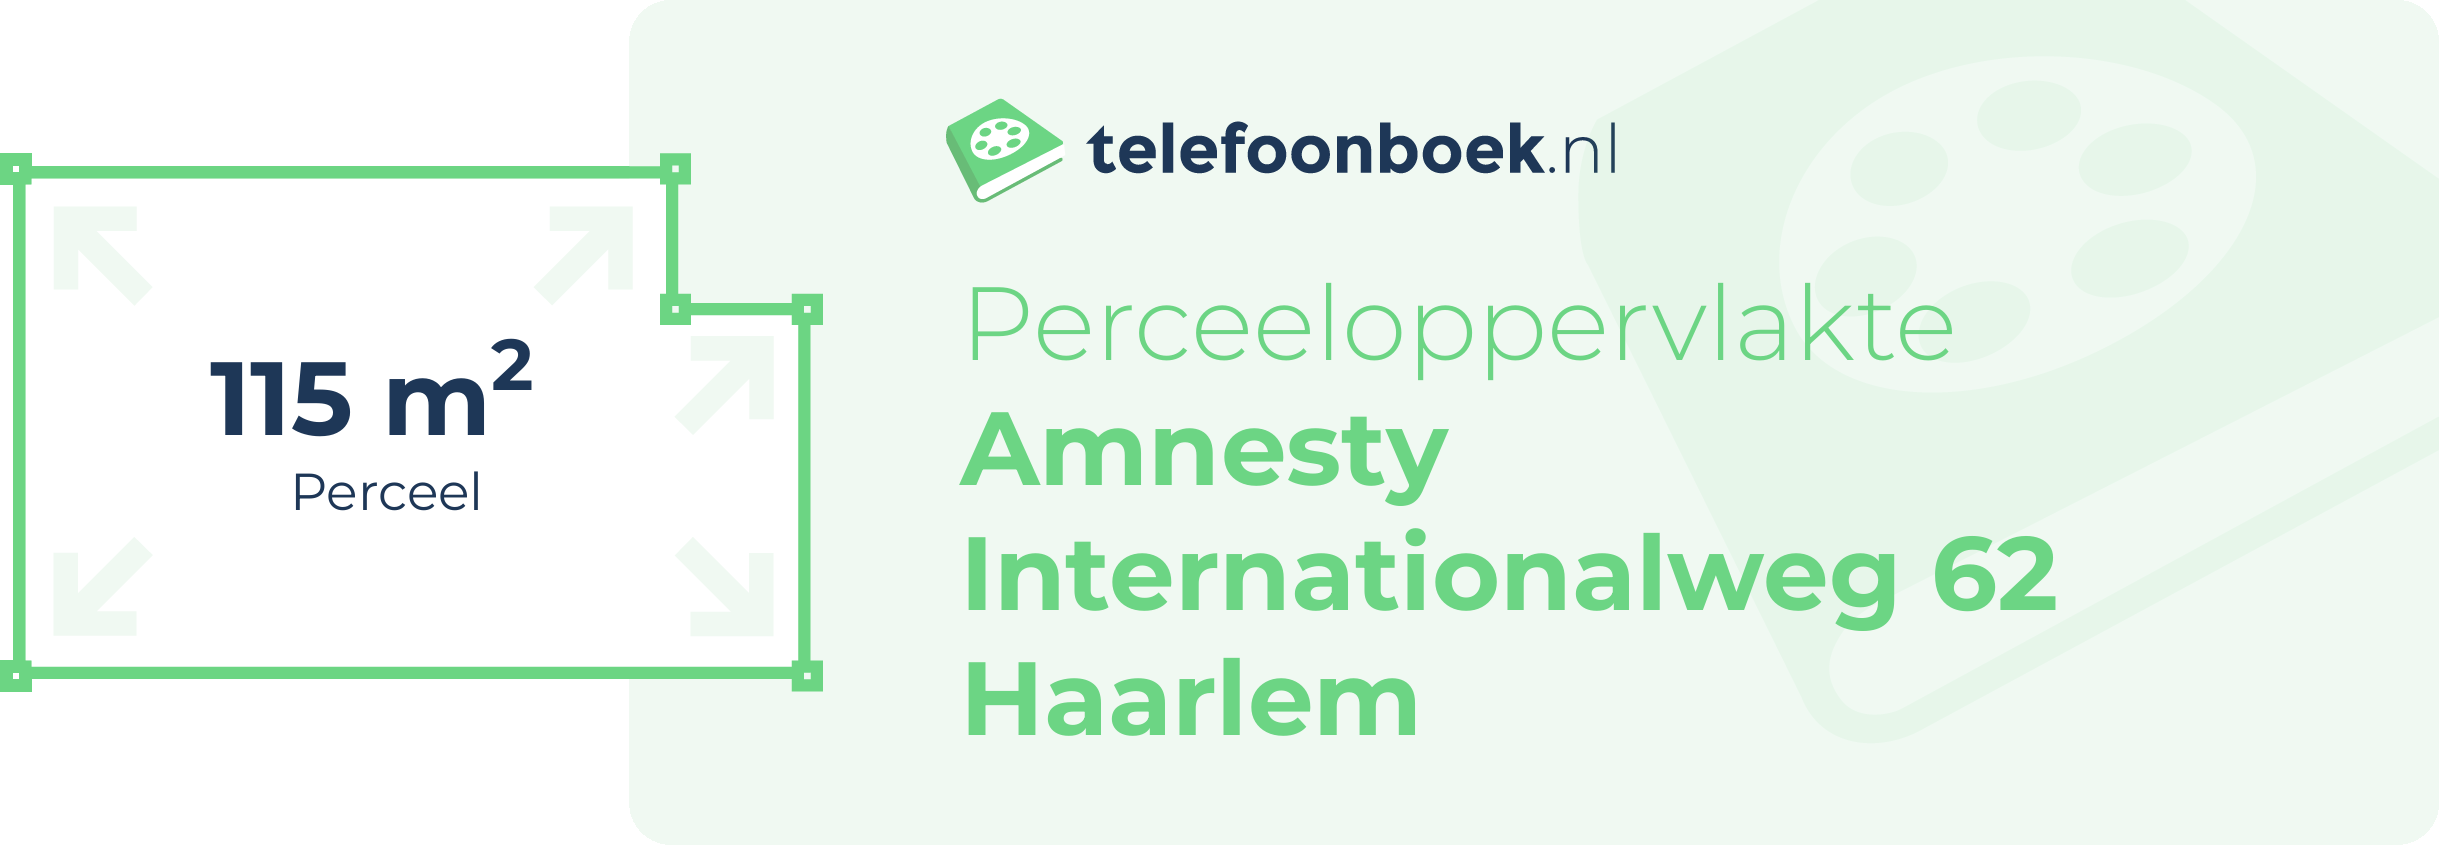 Perceeloppervlakte Amnesty Internationalweg 62 Haarlem